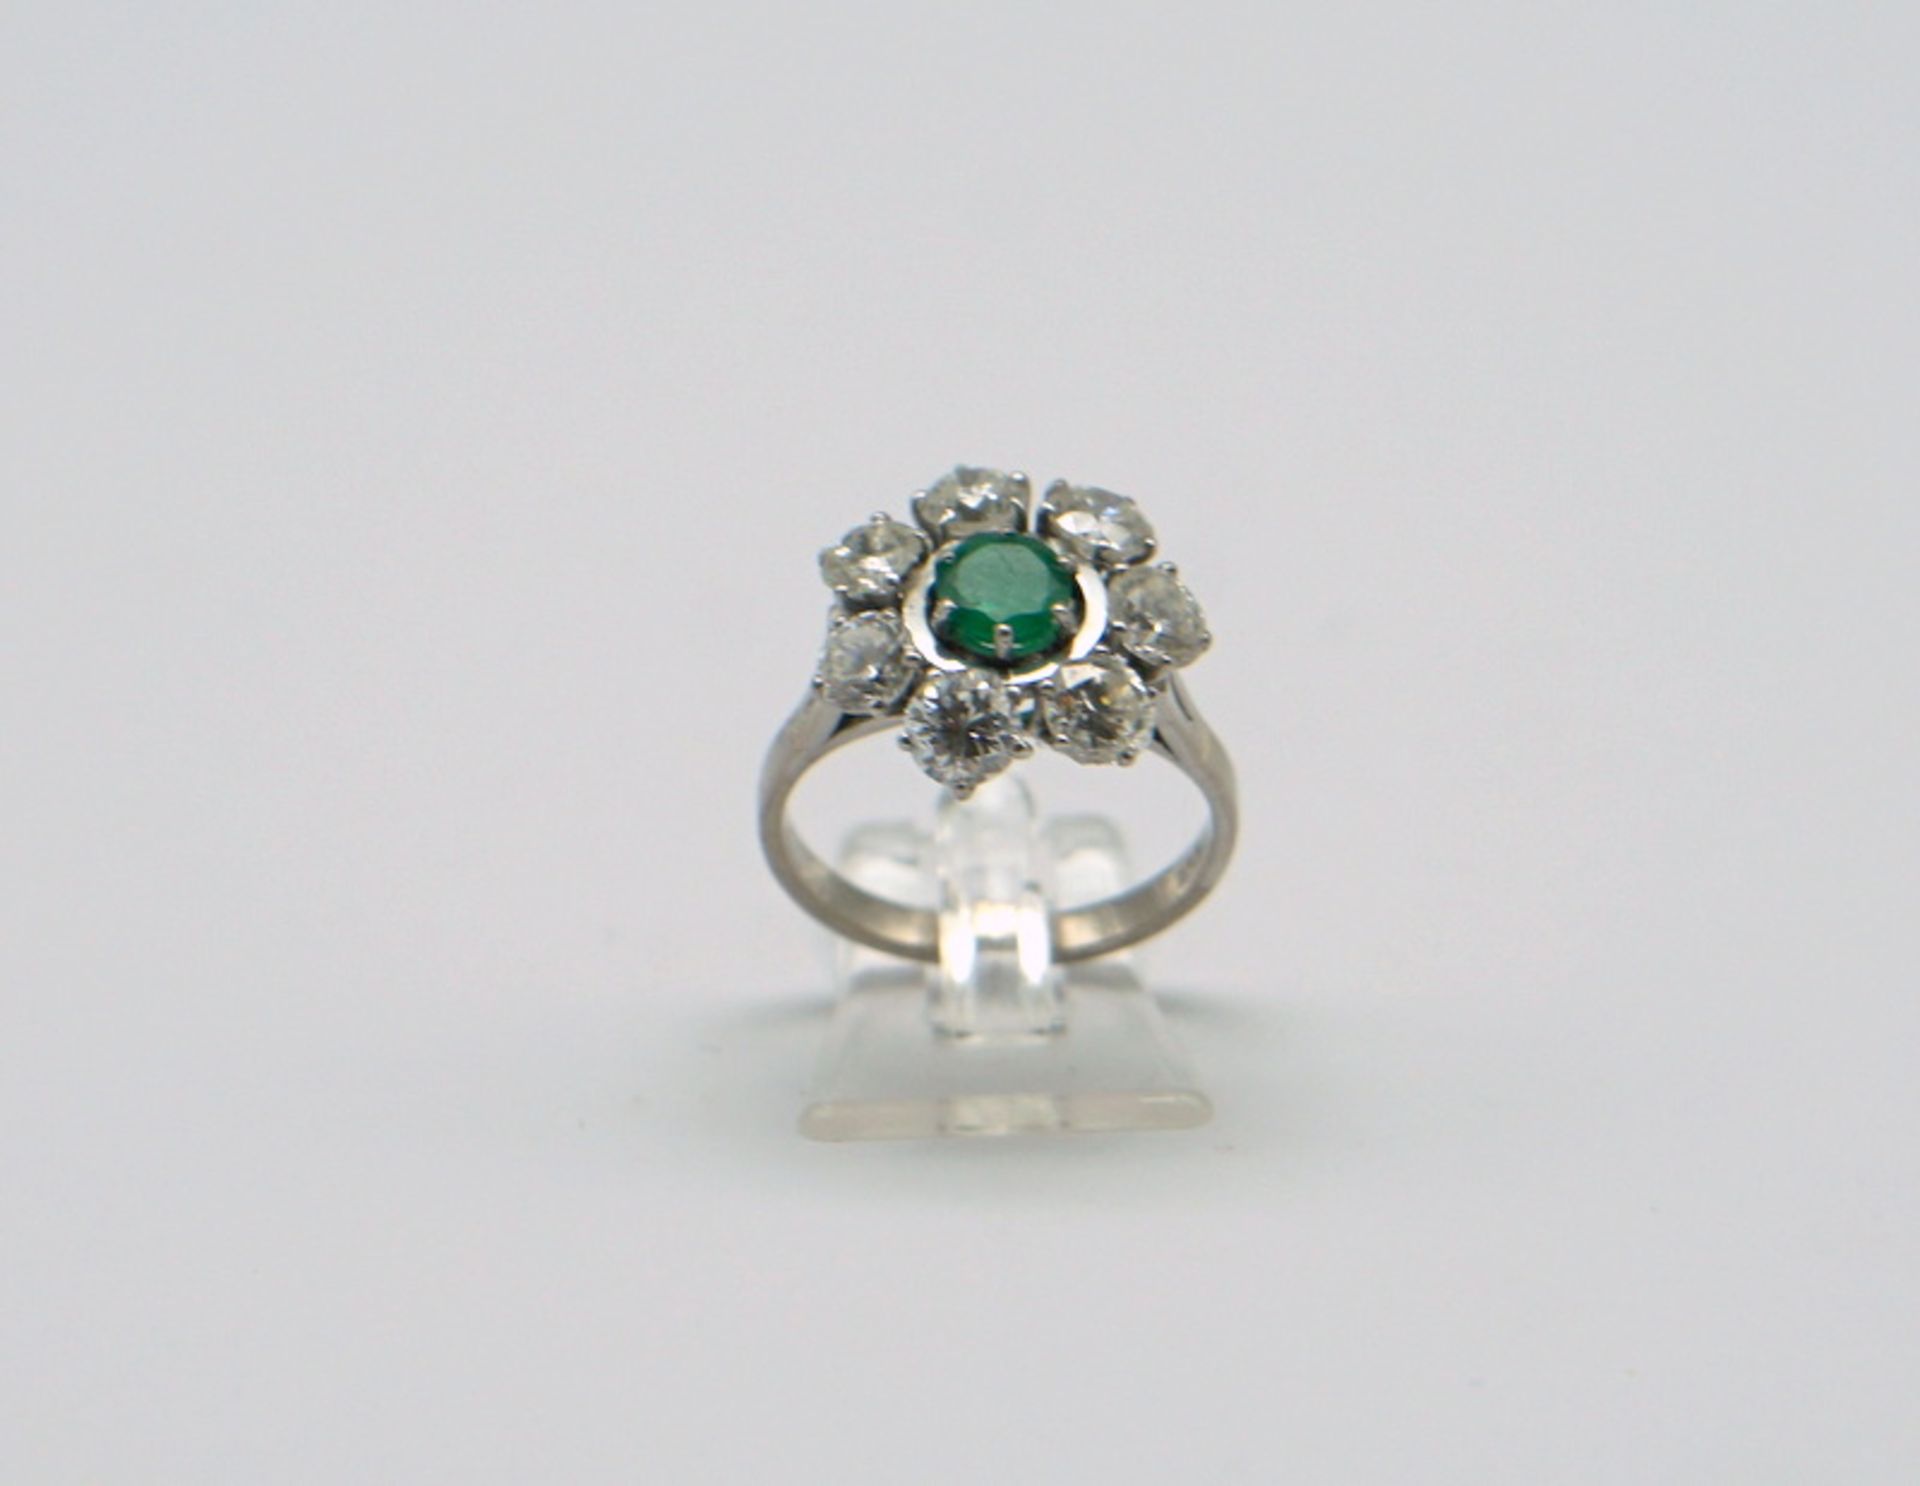 Blumenförmiger Ring mit Smaragd und Brillanten, 585 WG, 2ct Brillanten - Image 2 of 7